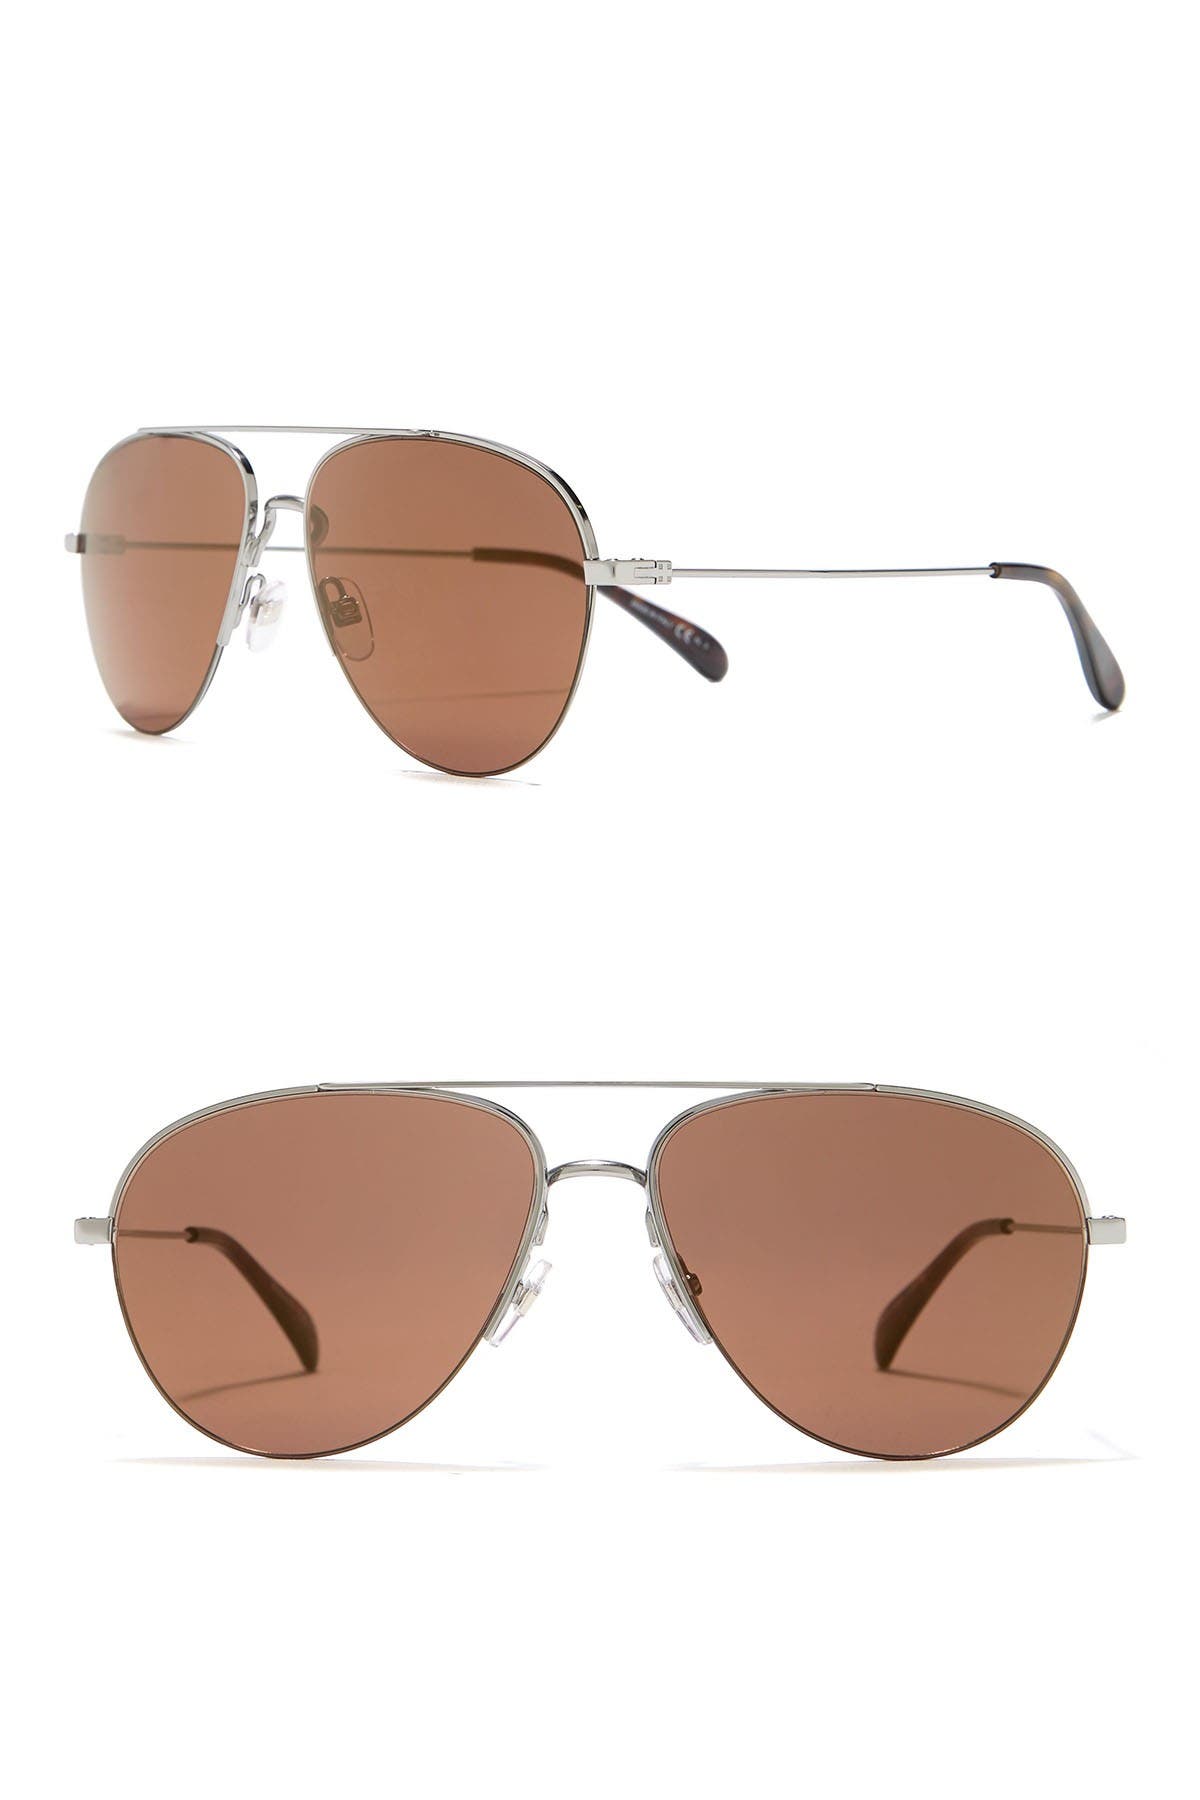 Givenchy | 61mm Aviator Sunglasses 